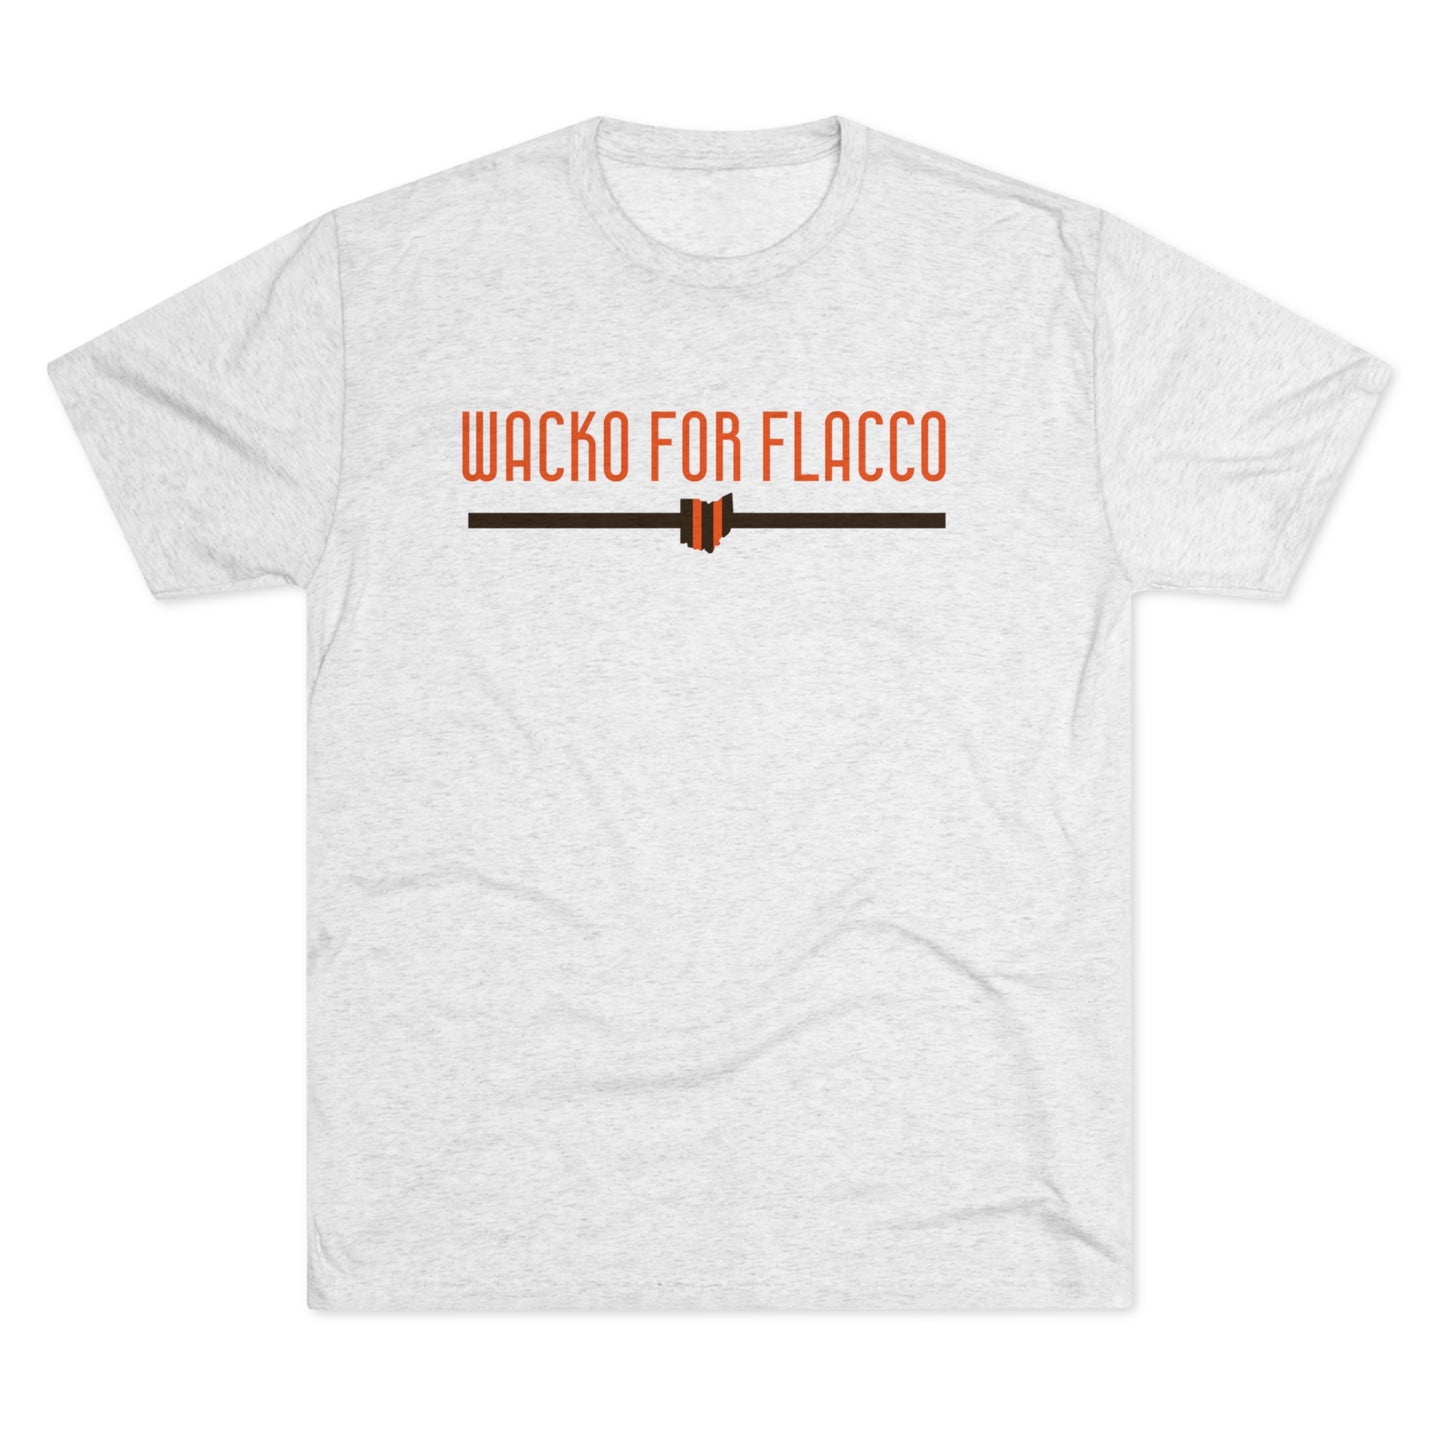 Wacko for Flacco Cleveland Browns Tshirt - Home Field Fan